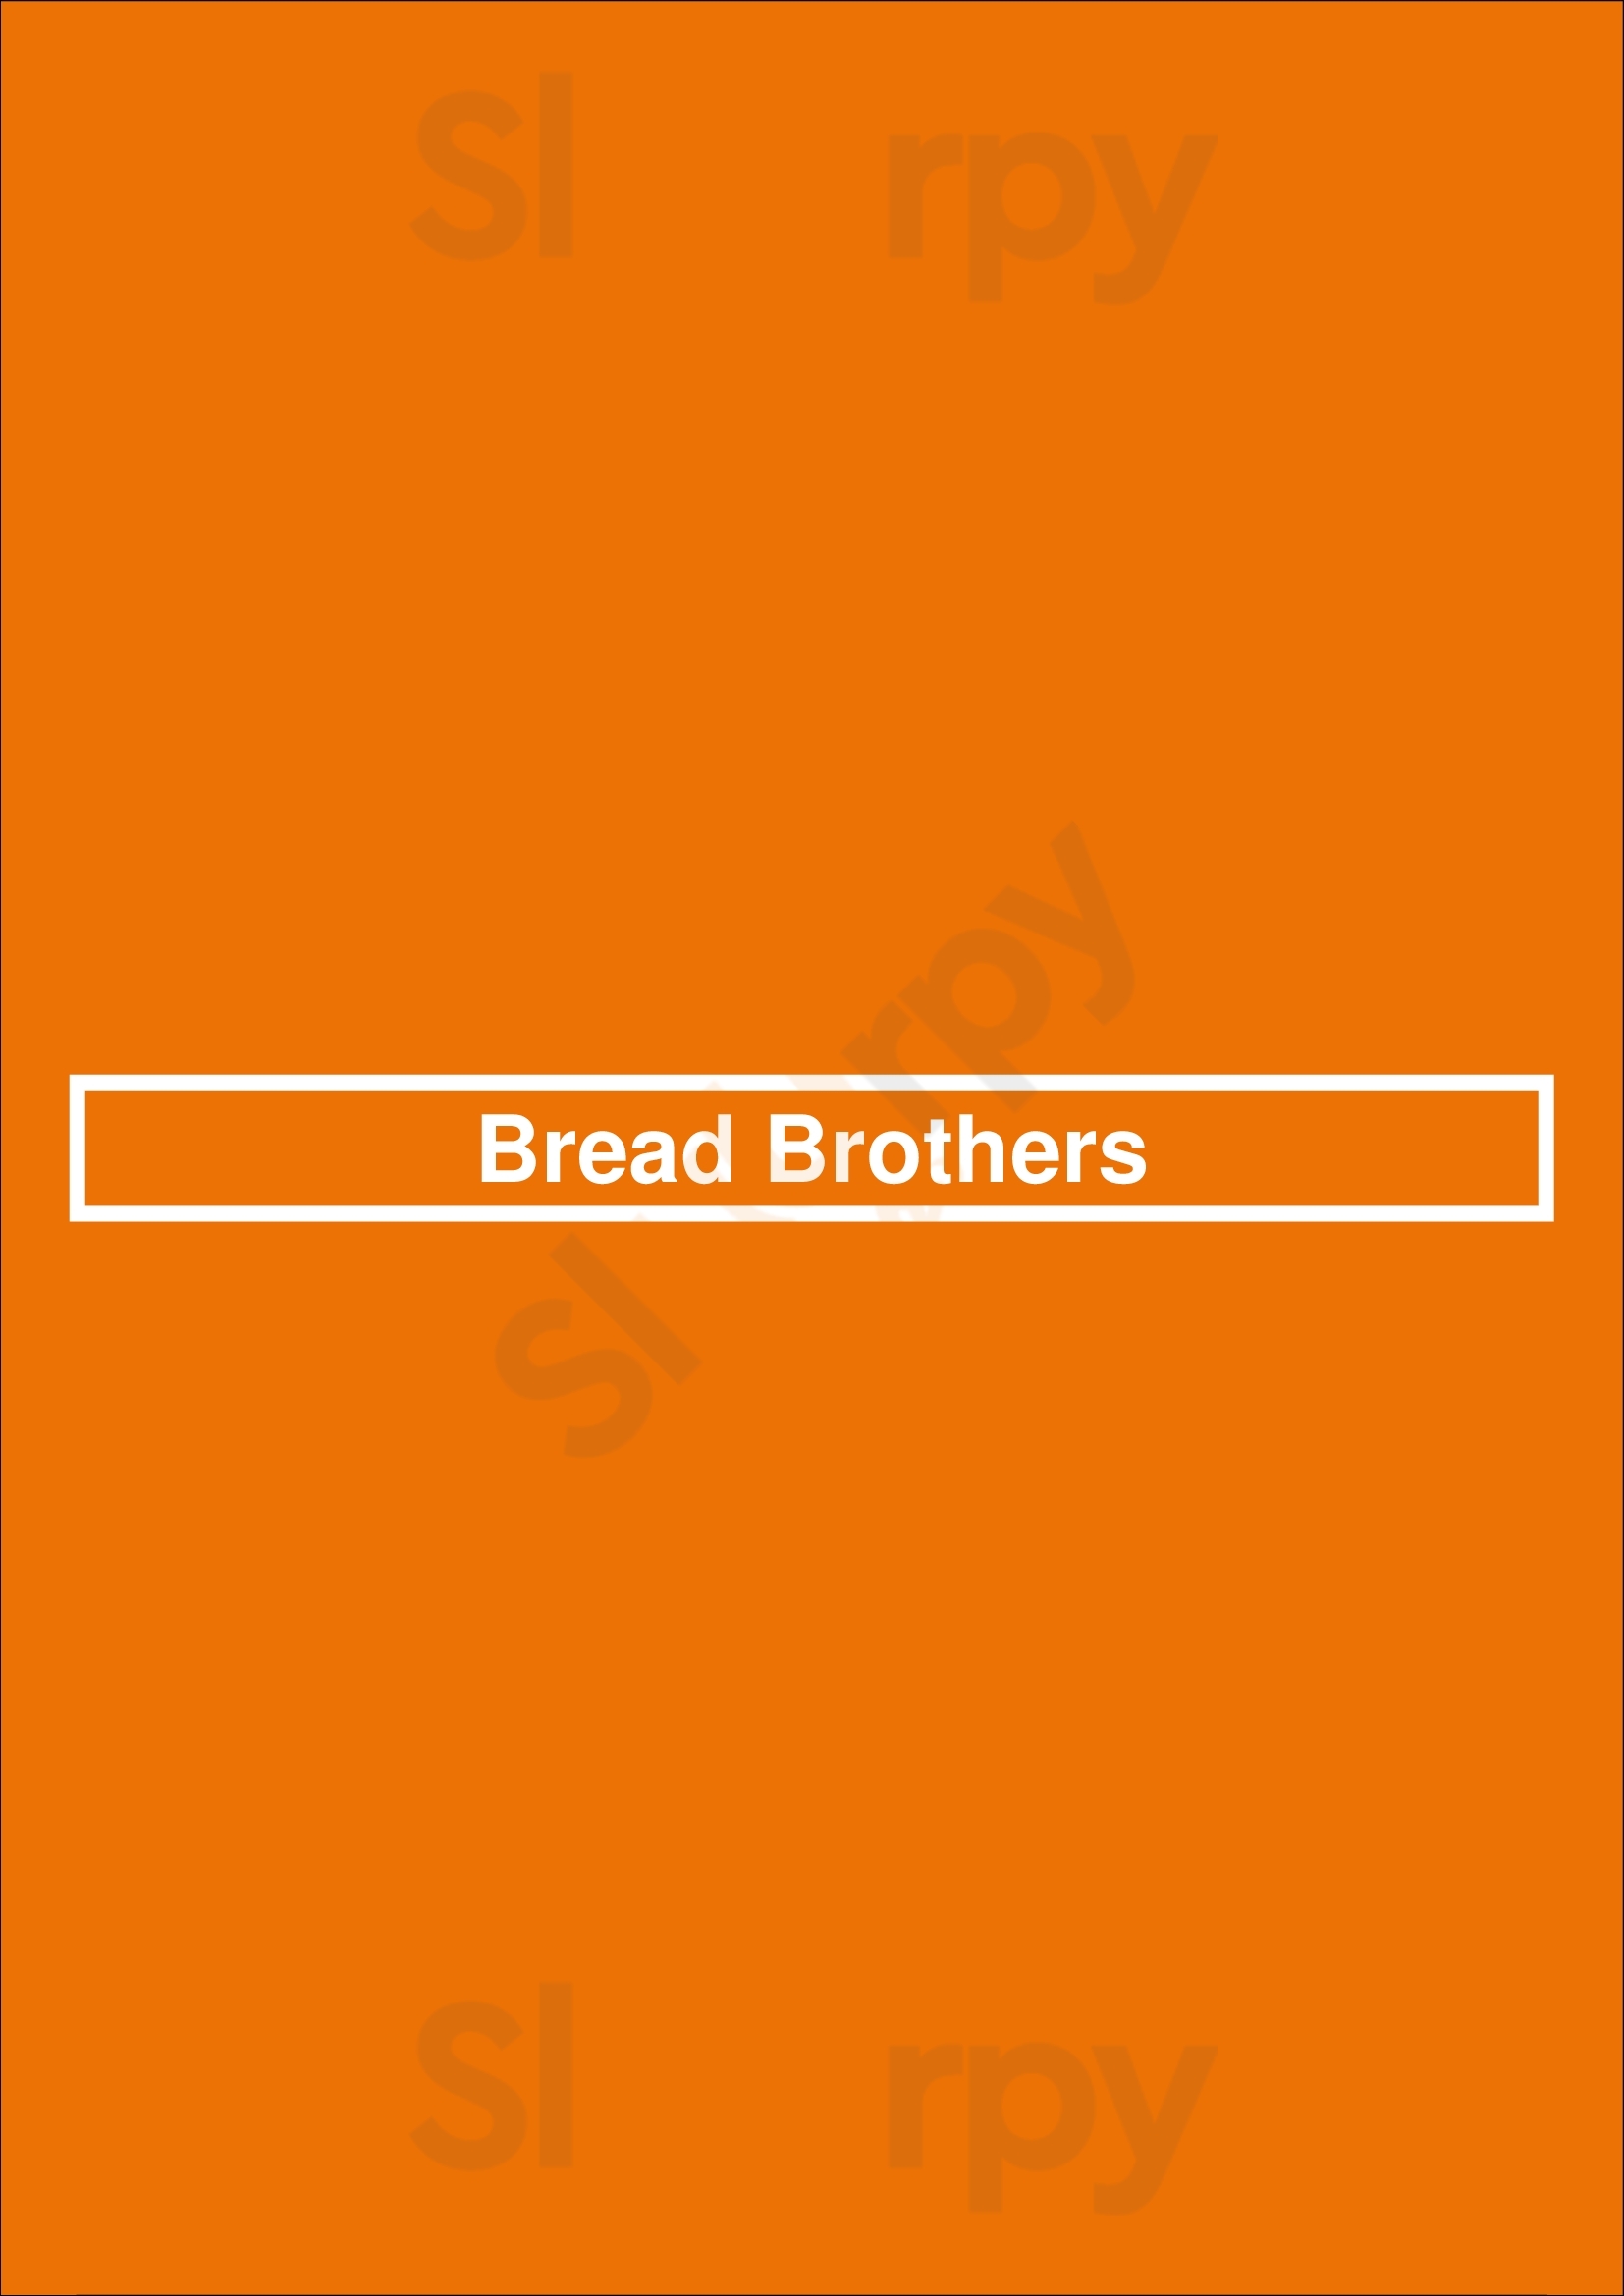 Bread Brothers San Jose Menu - 1